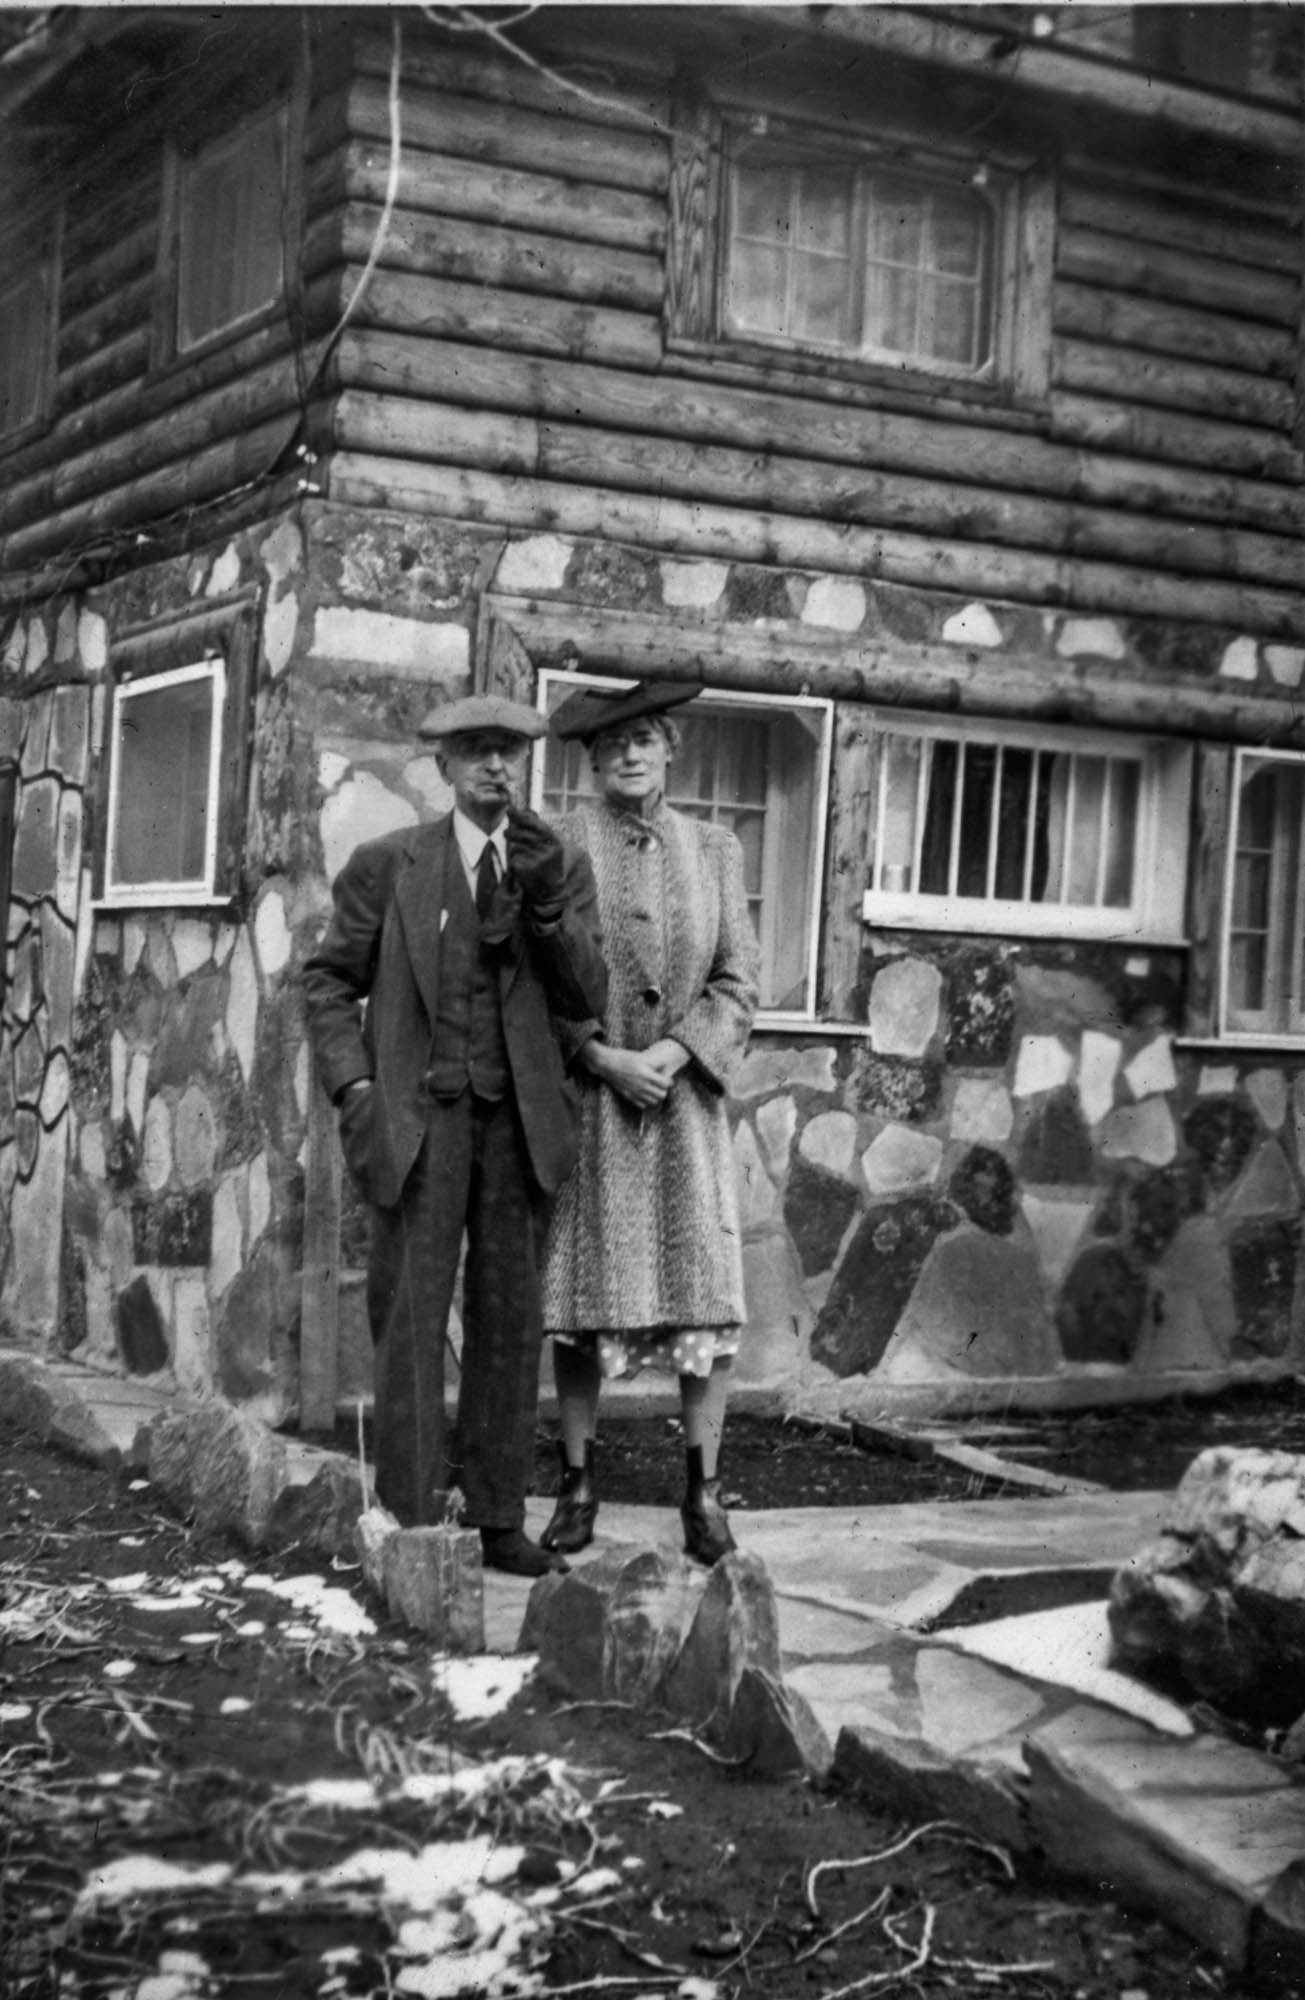 Idlewild Lodge - idlewildlodge.github.io - George and Florence Dauth at Idlewild Lodge in the 1940s